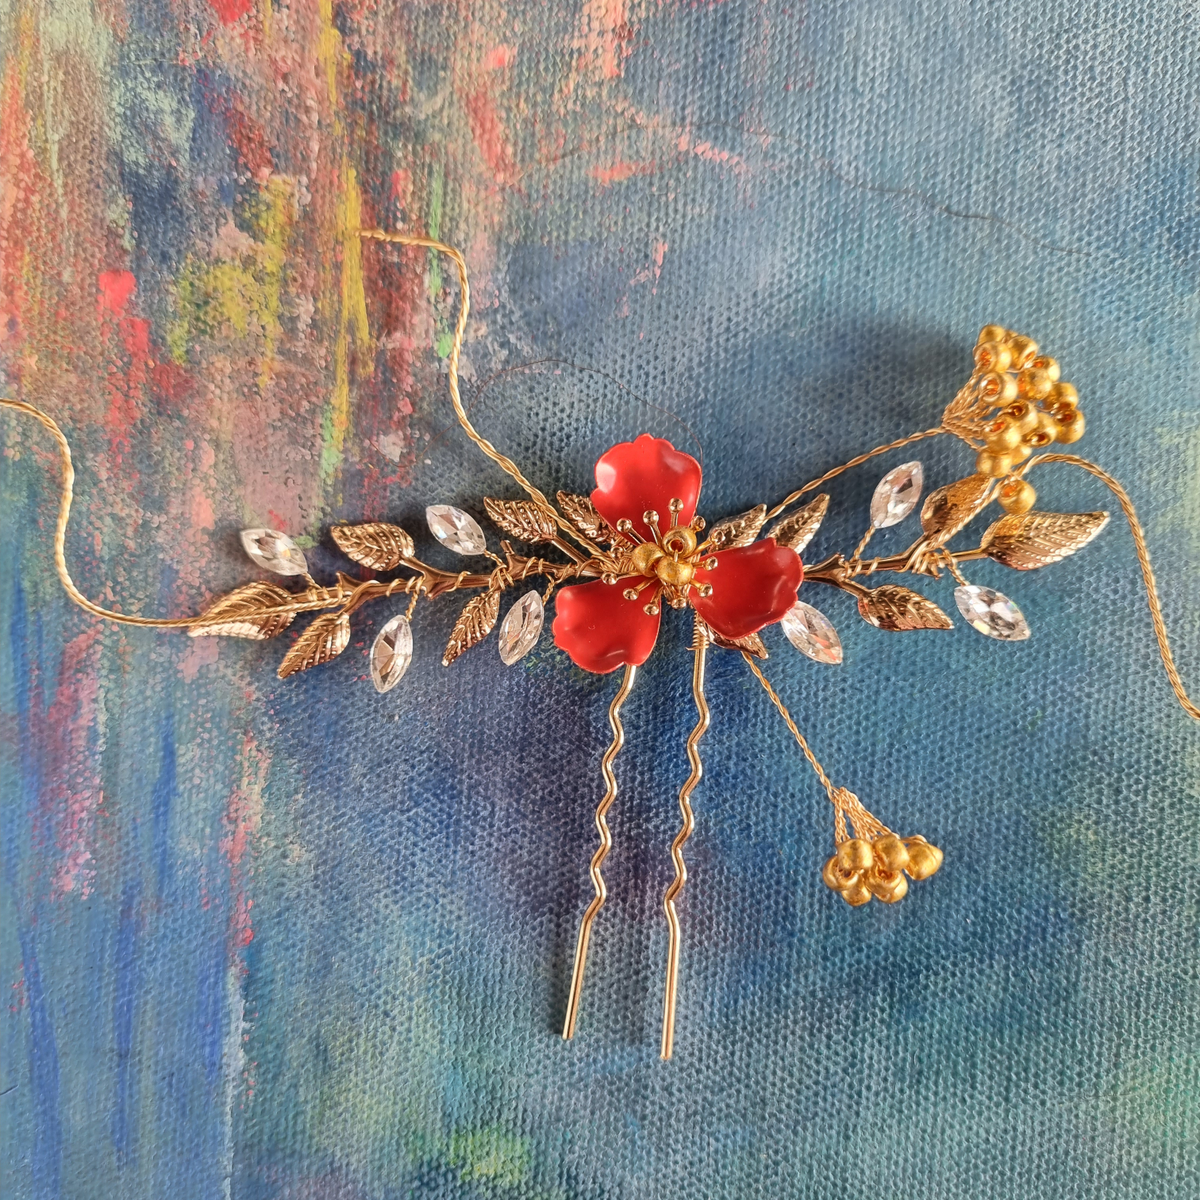 Stor hårnål med rød blomst i emalje - Hårpynt med blomster og perler til bryllup, konfirmation og fest